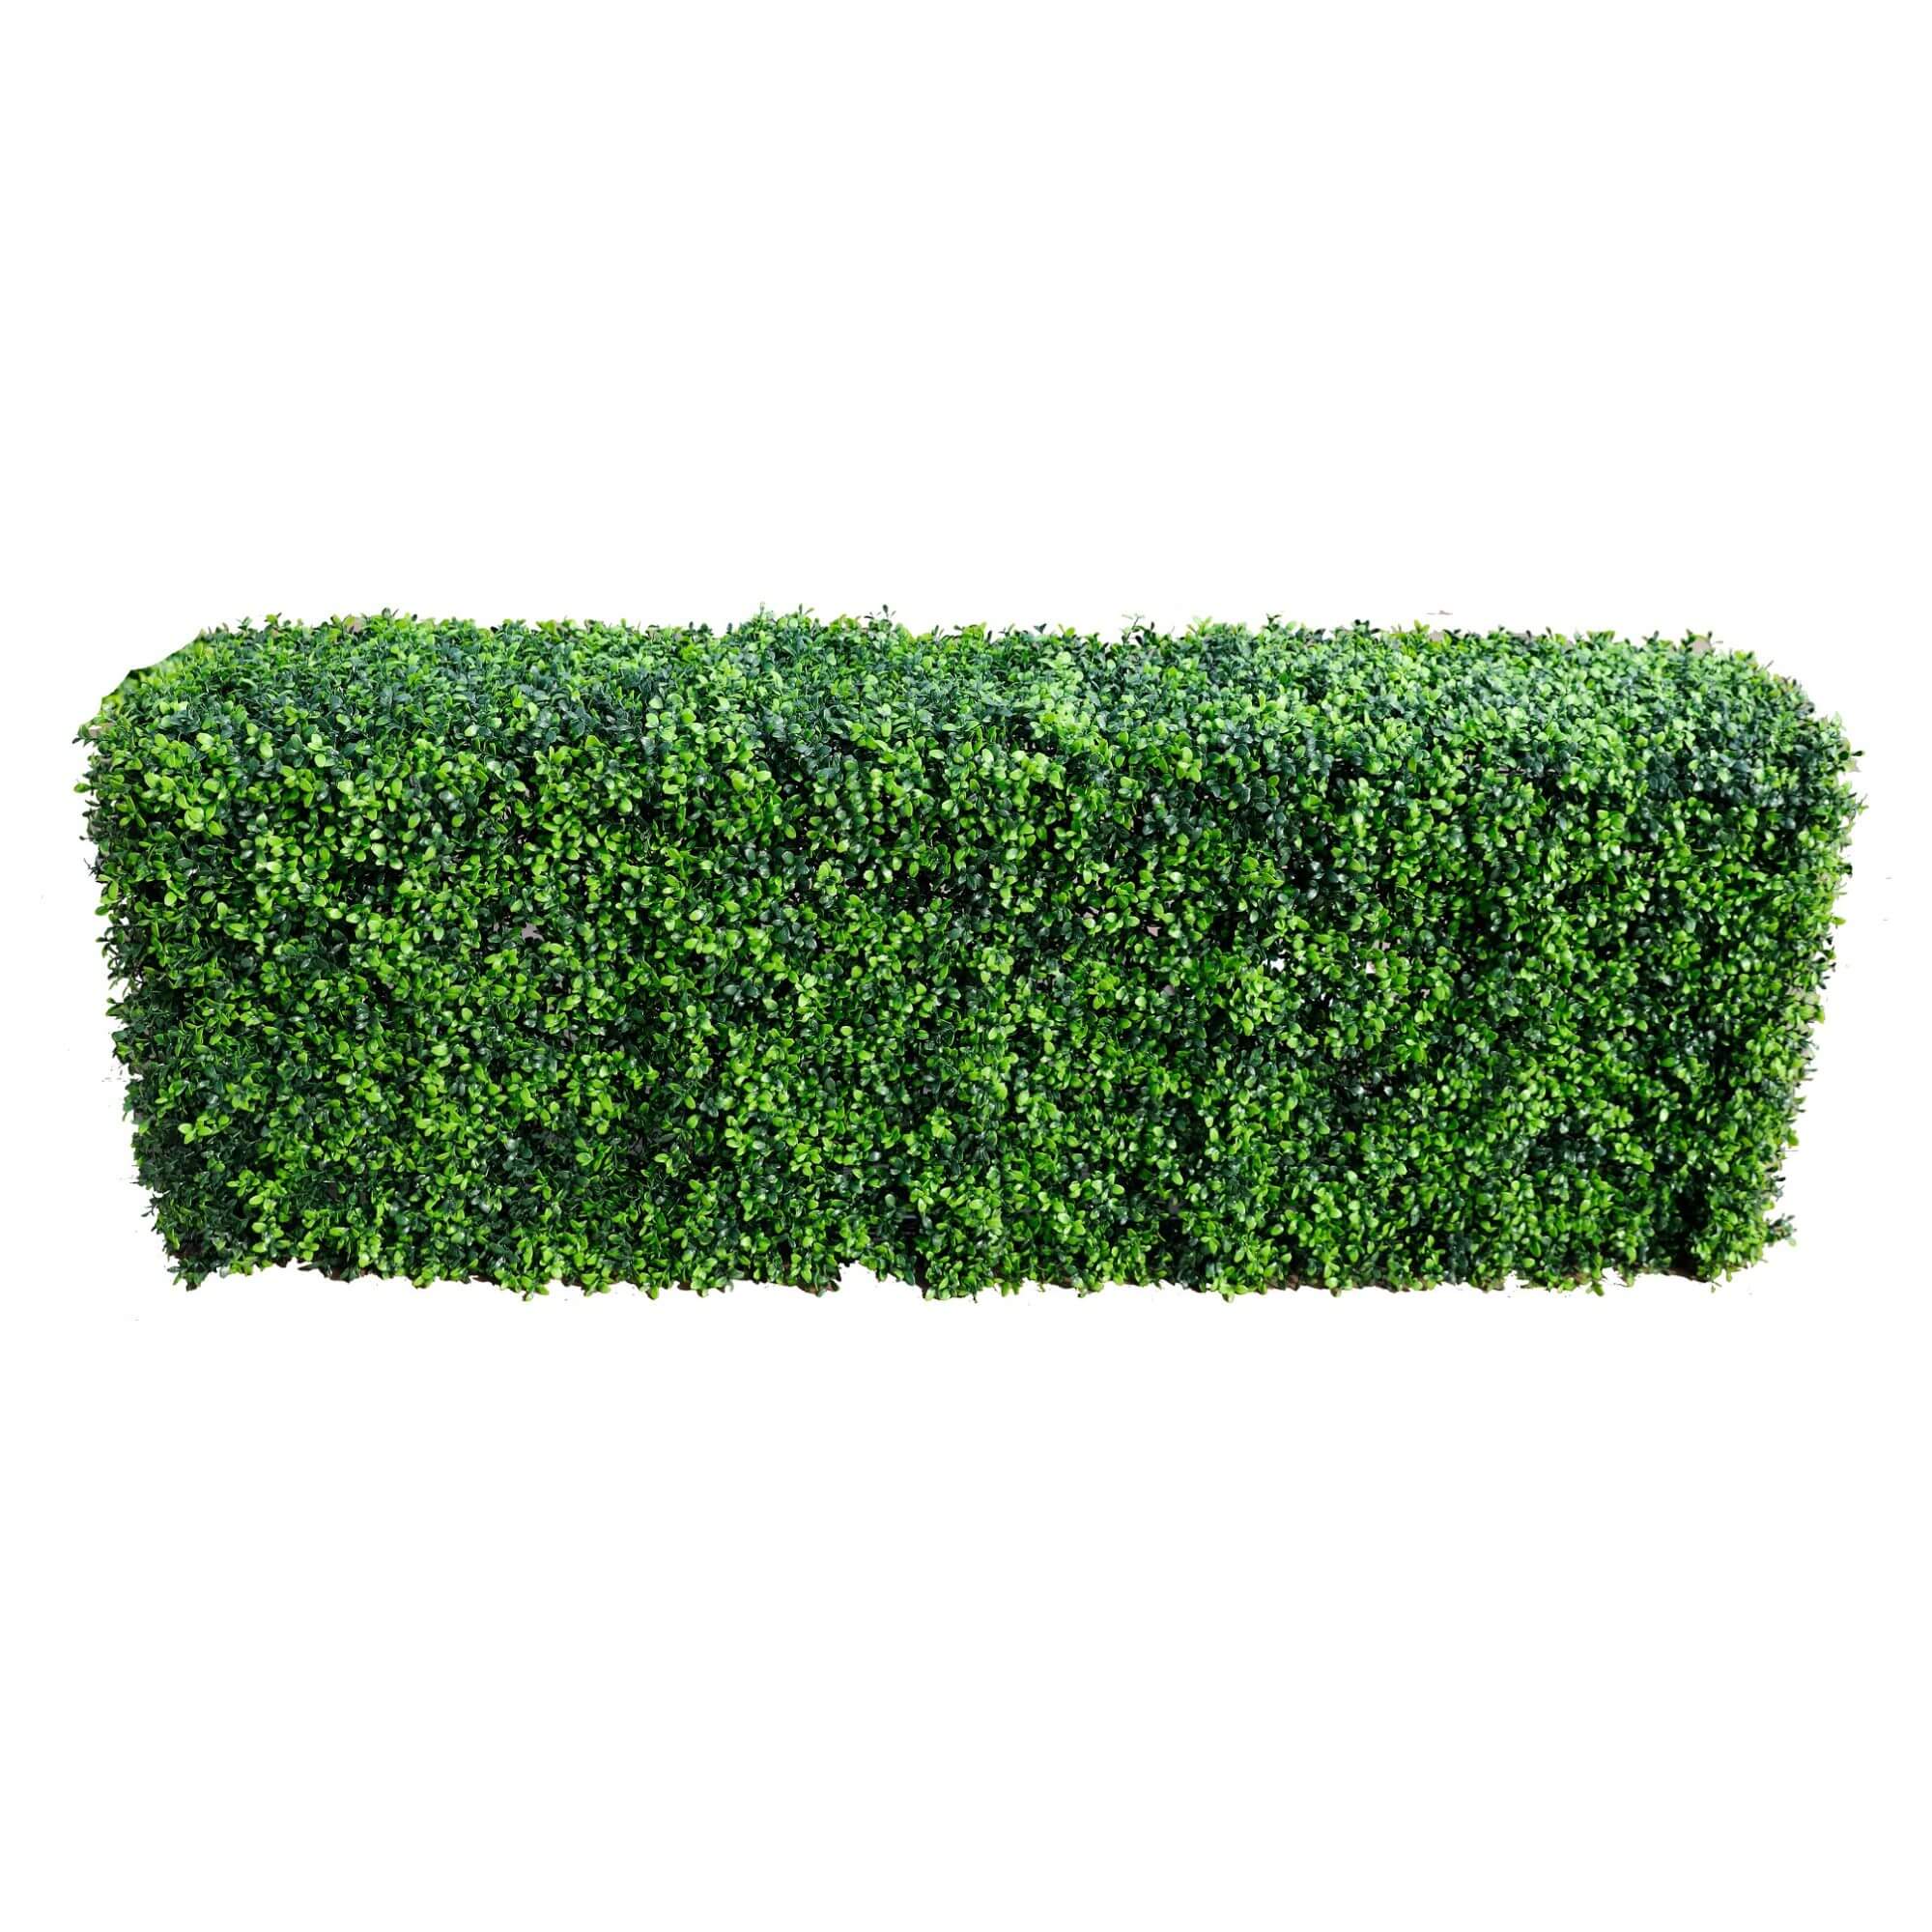 Deluxe Portable Bright Buxus UV Resistant Artificial Hedge 100cm x 50cm x 25cm - Designer Vertical Gardens artificial vertical green wall Portable Hedges